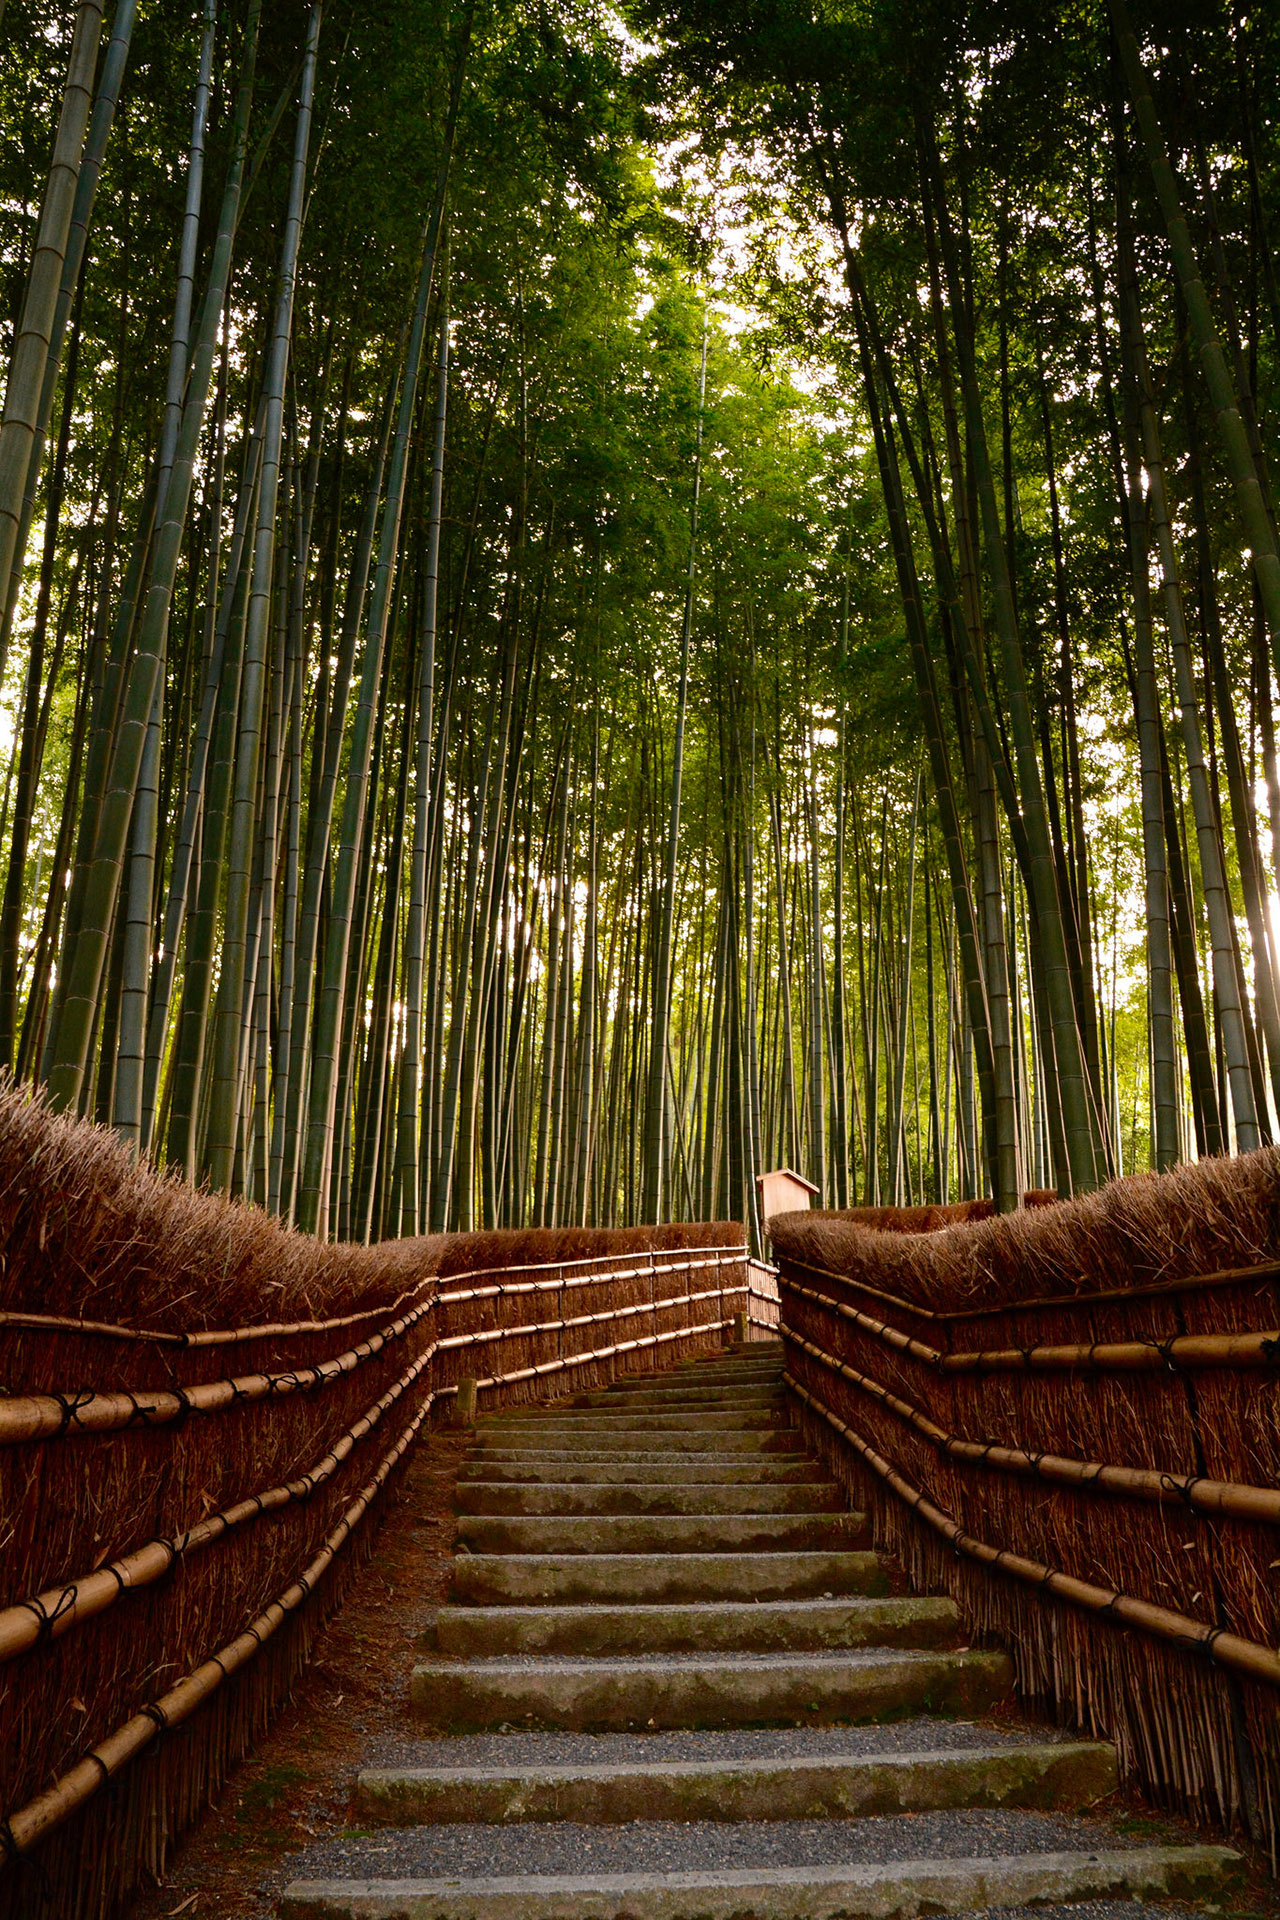 Visaland | Храм Фусими-Инари или Святилище из тысячи алых ворот (Киото)